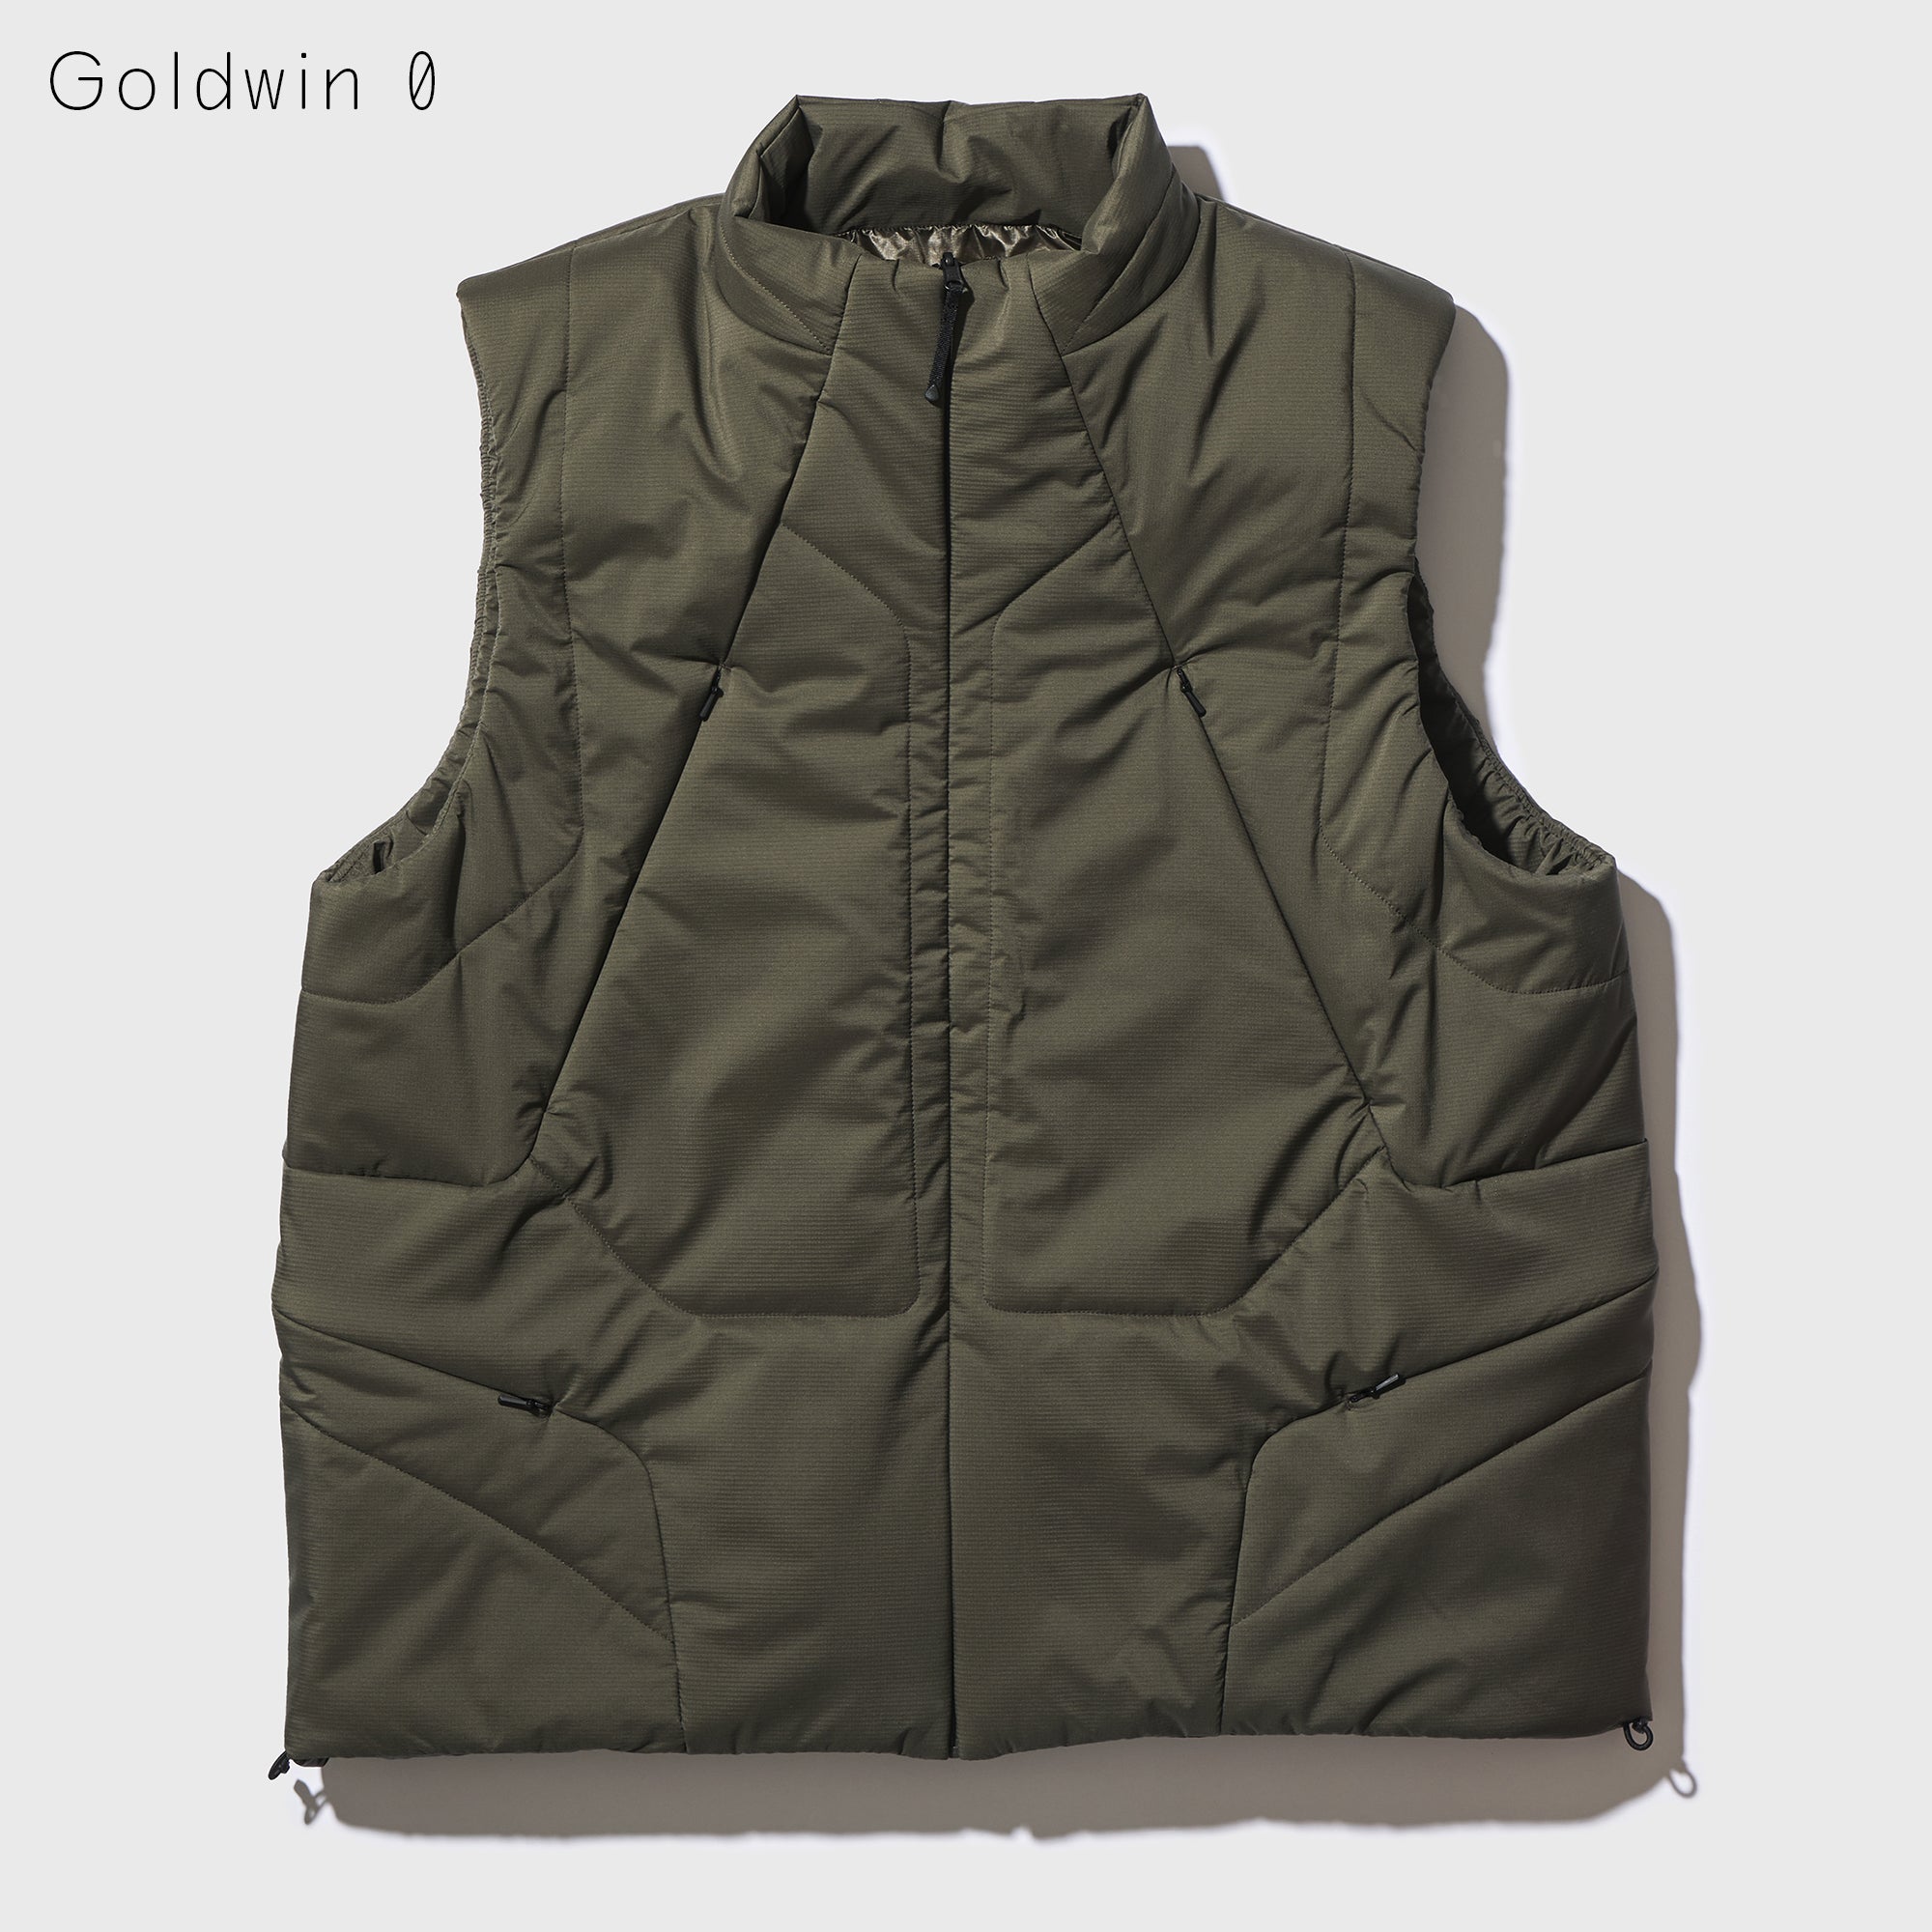 22aw goldwin 0 insulated vest ダウンベストメンズ